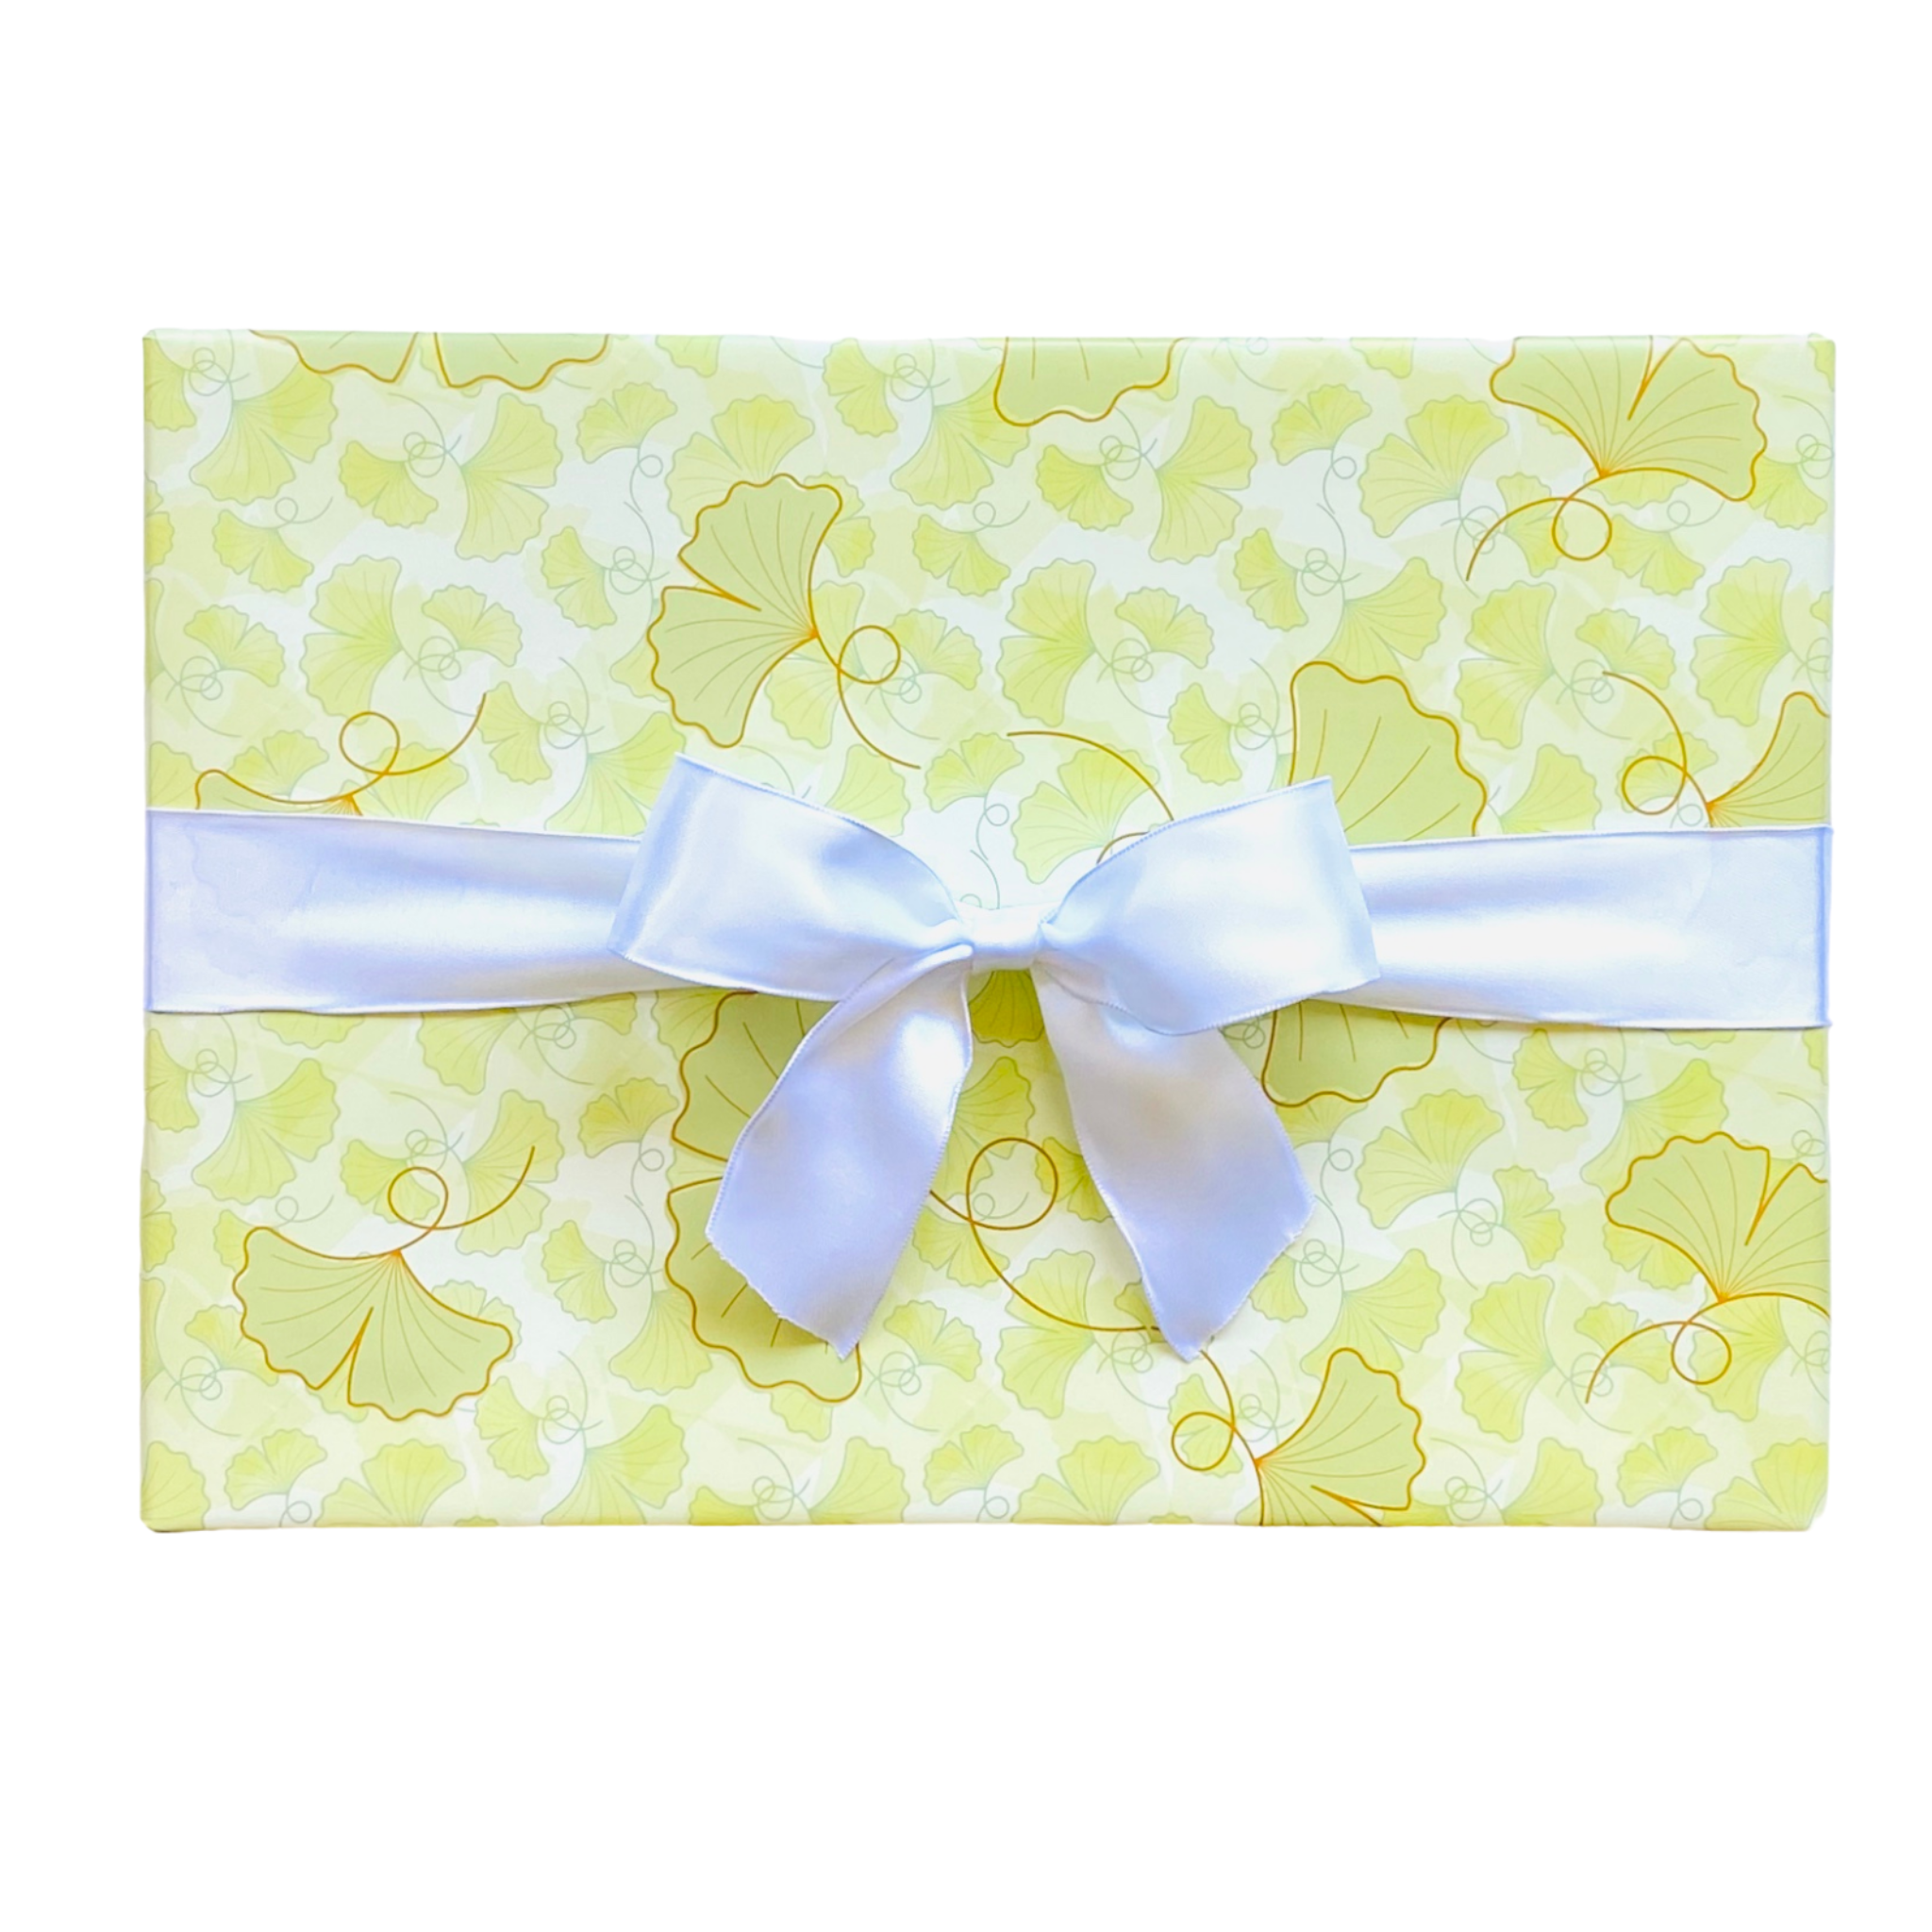 Luxury Gift Box Wrapped in Ginkgo Biloba Green Gift Wrap